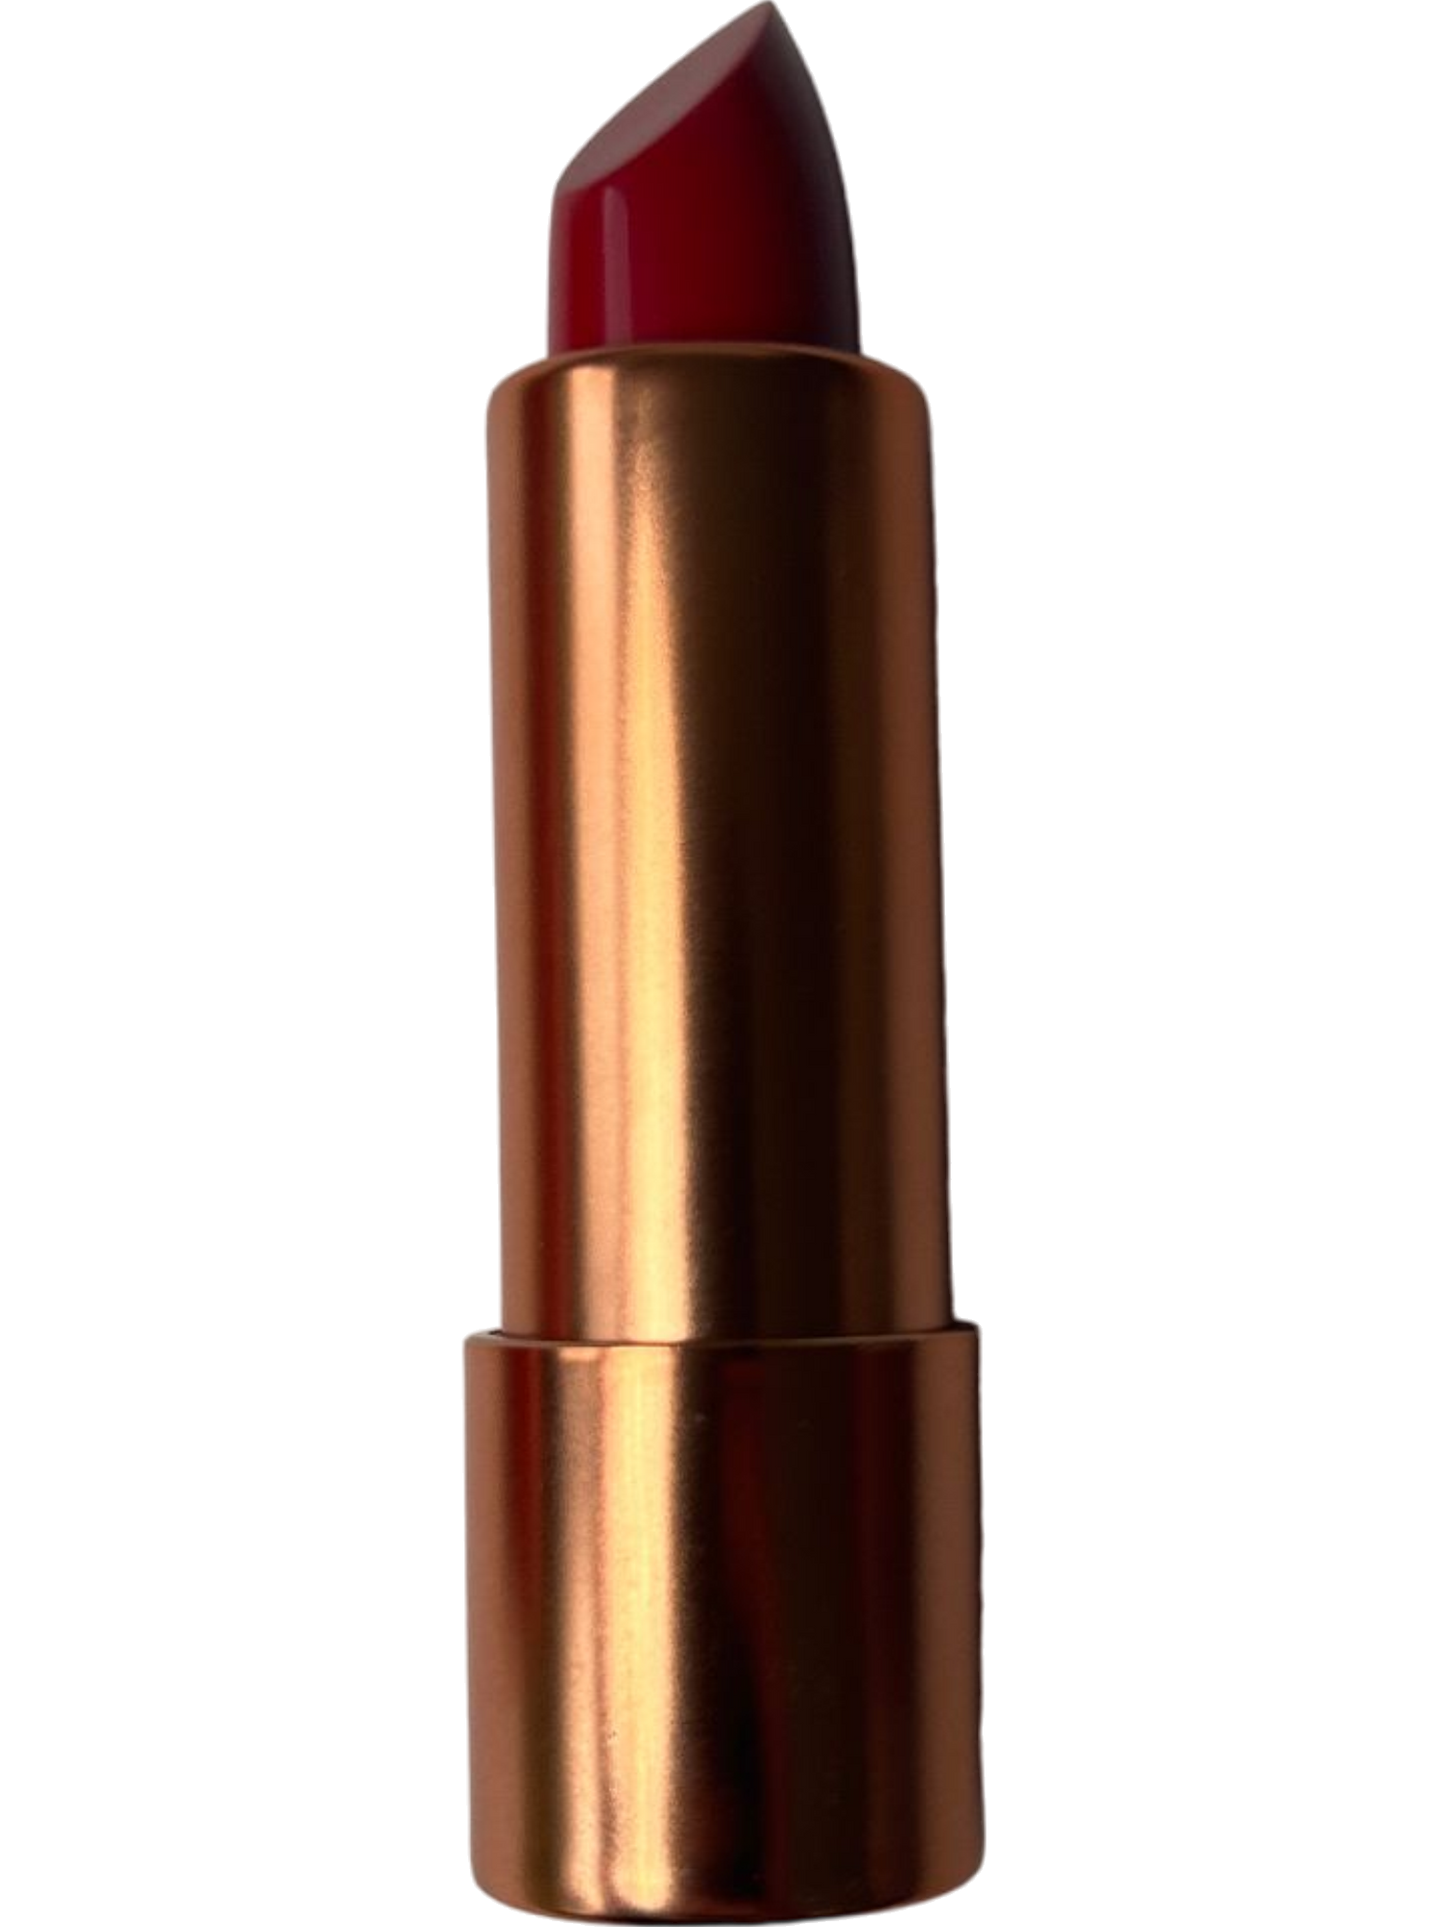 Yensa Red Vibrant Silk Lipstick - infinity 3.5g